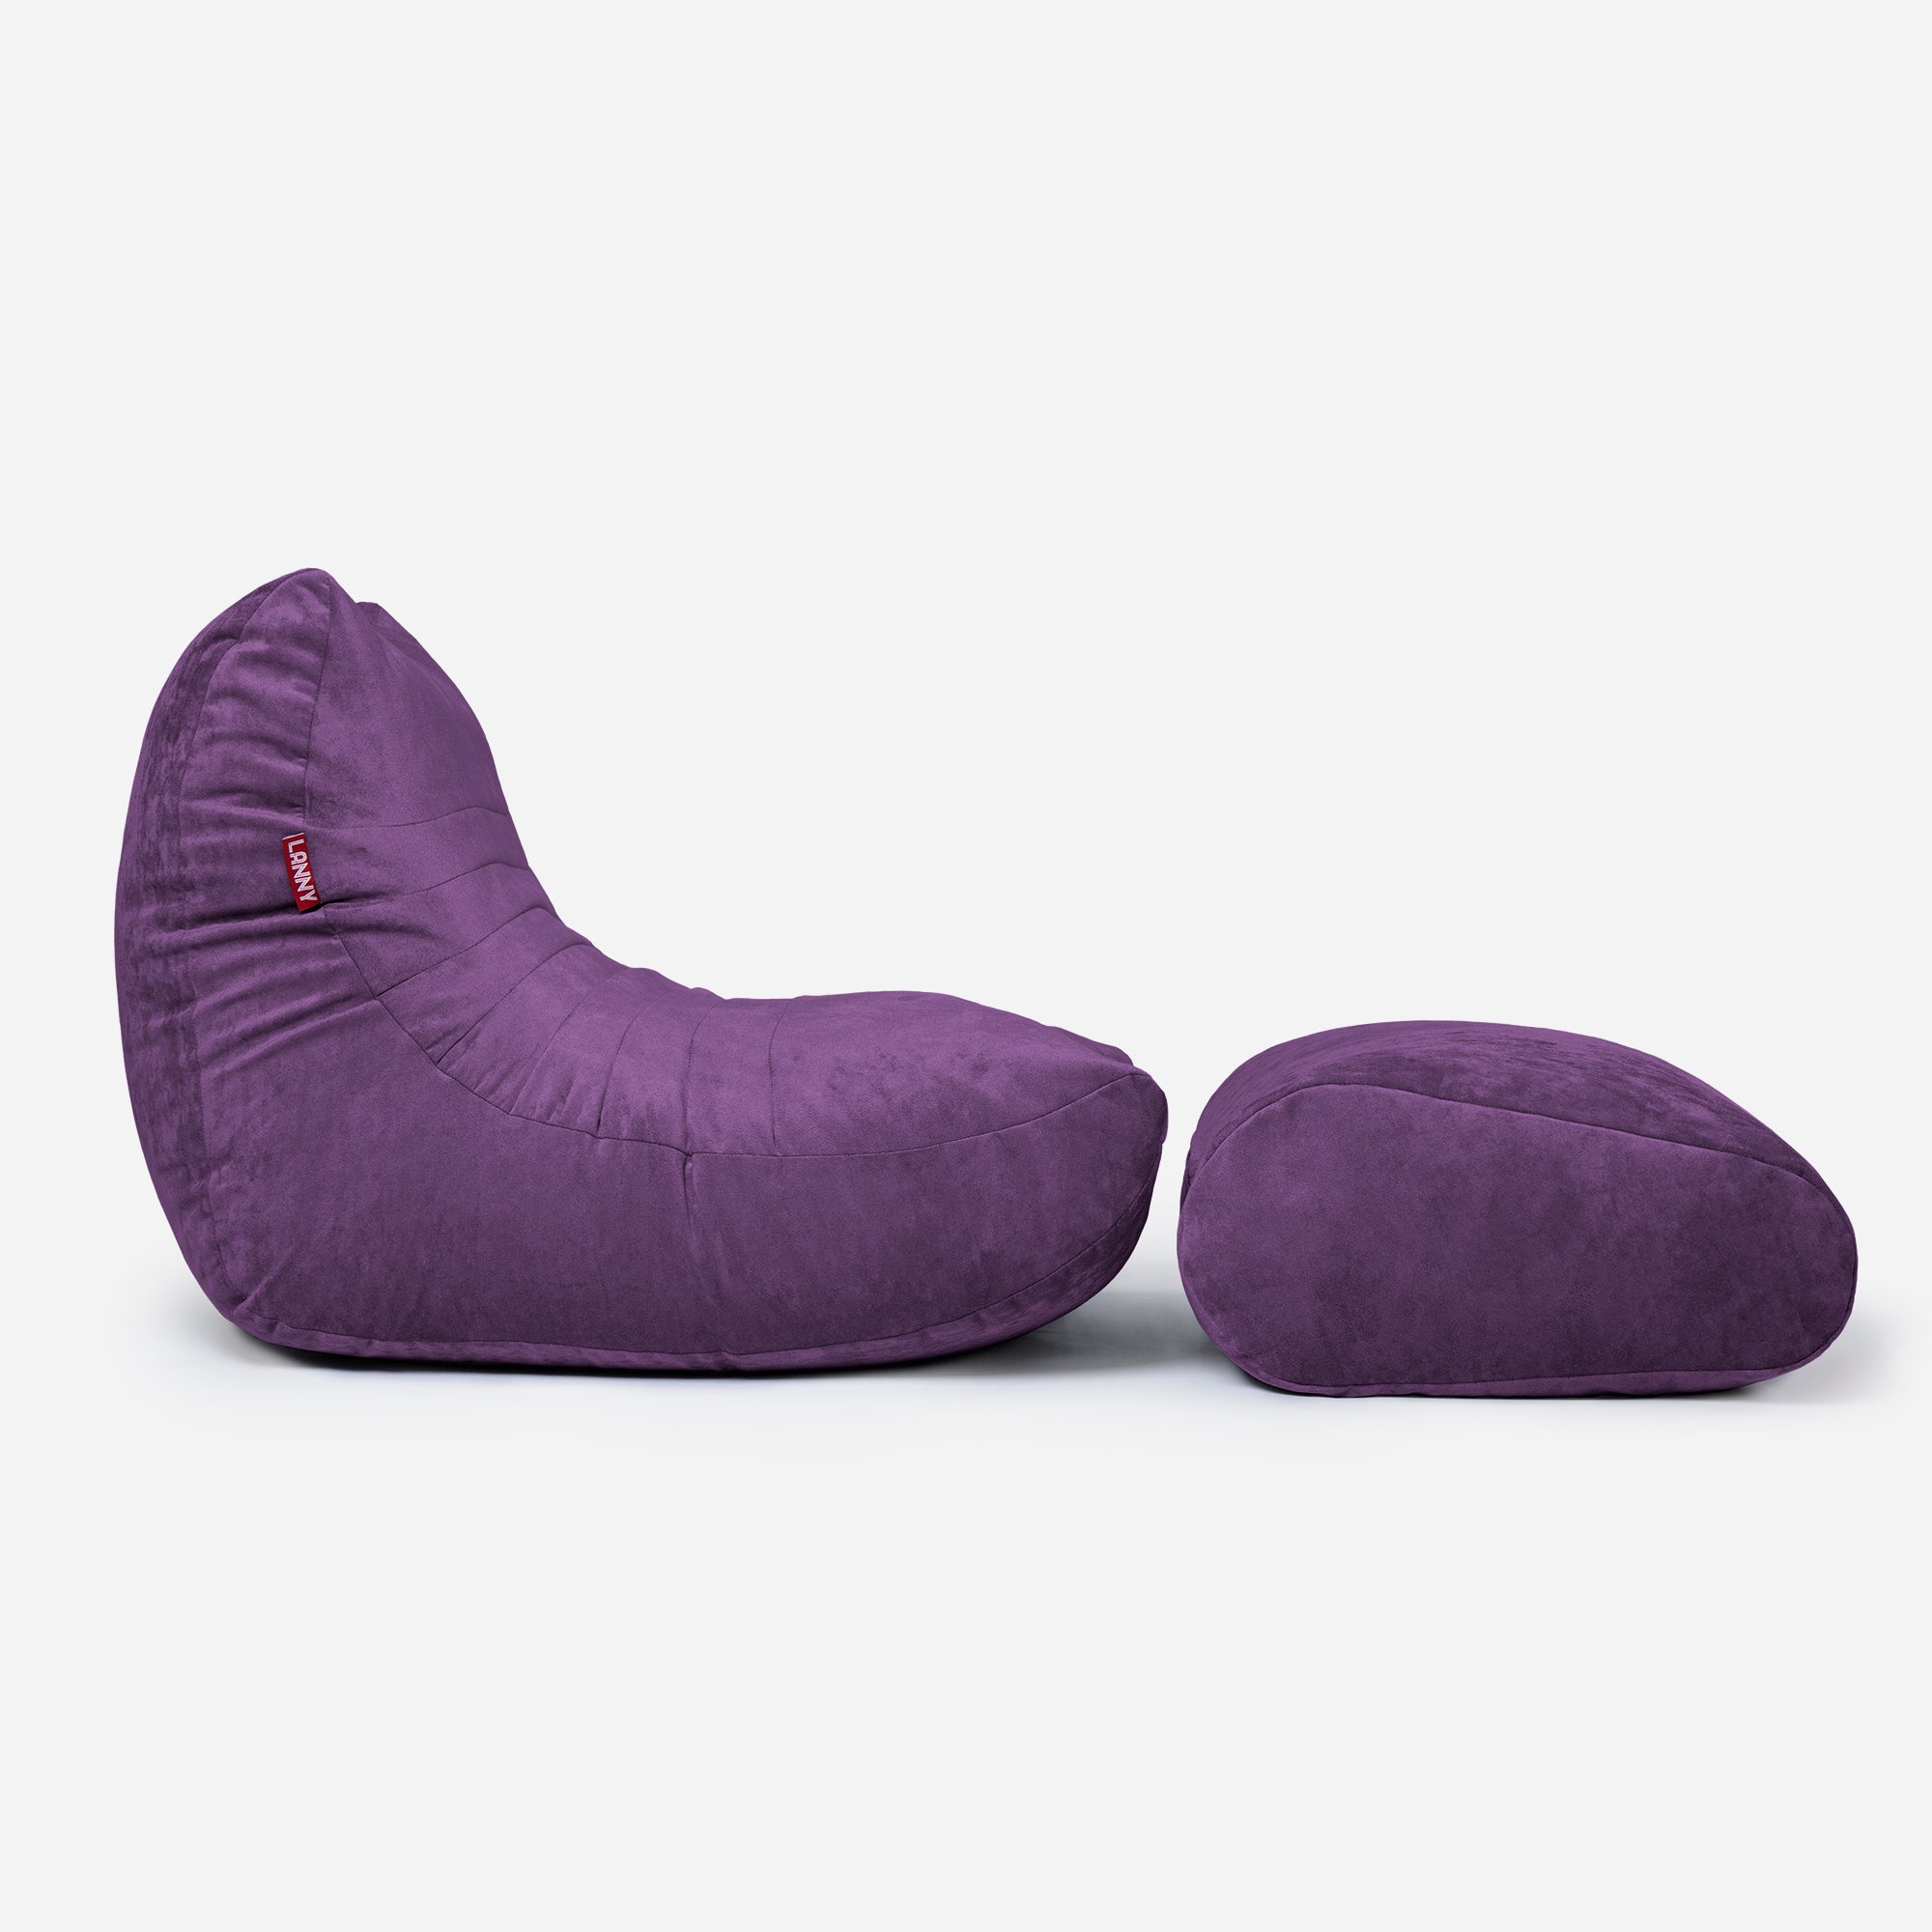 Curvy Aldo Violet Bean Bag Chair